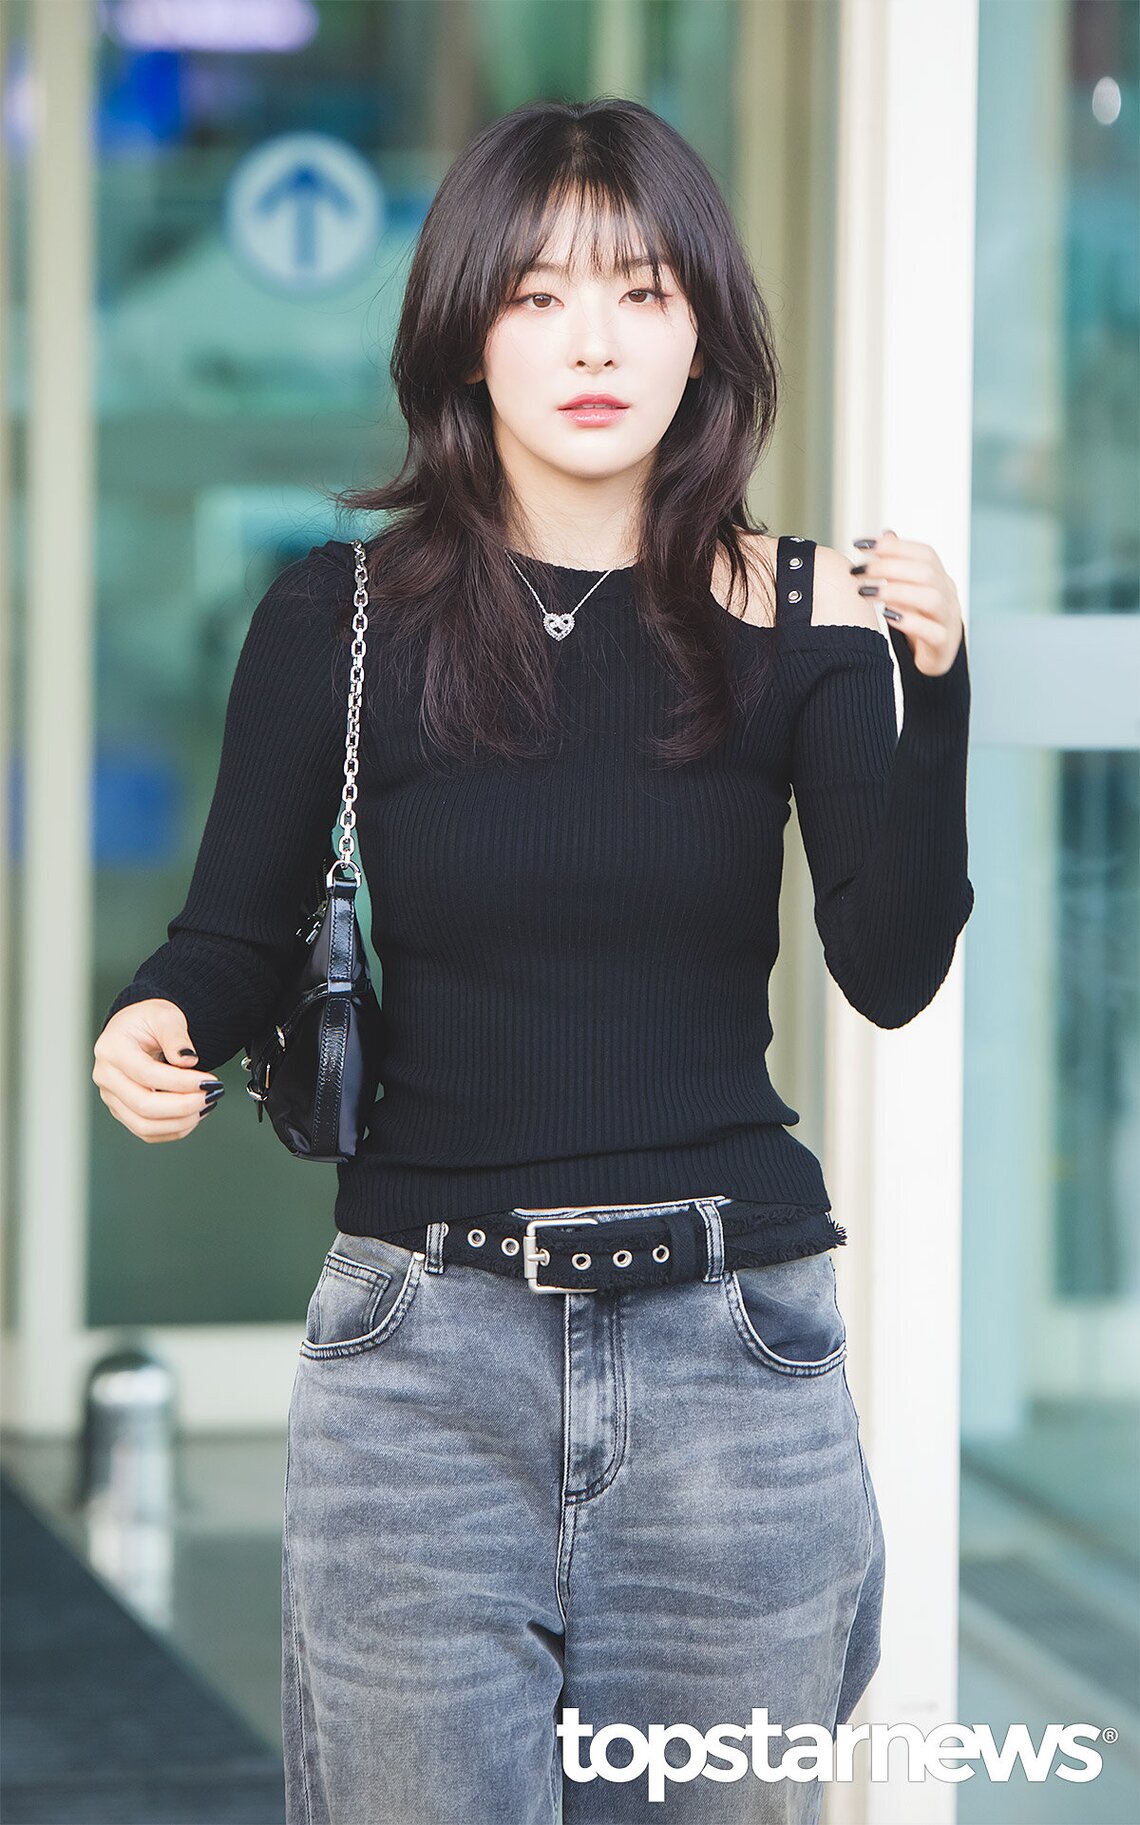 HQ Pics: BLACKPINK Jisoo Airport Fashion April 20, 2018